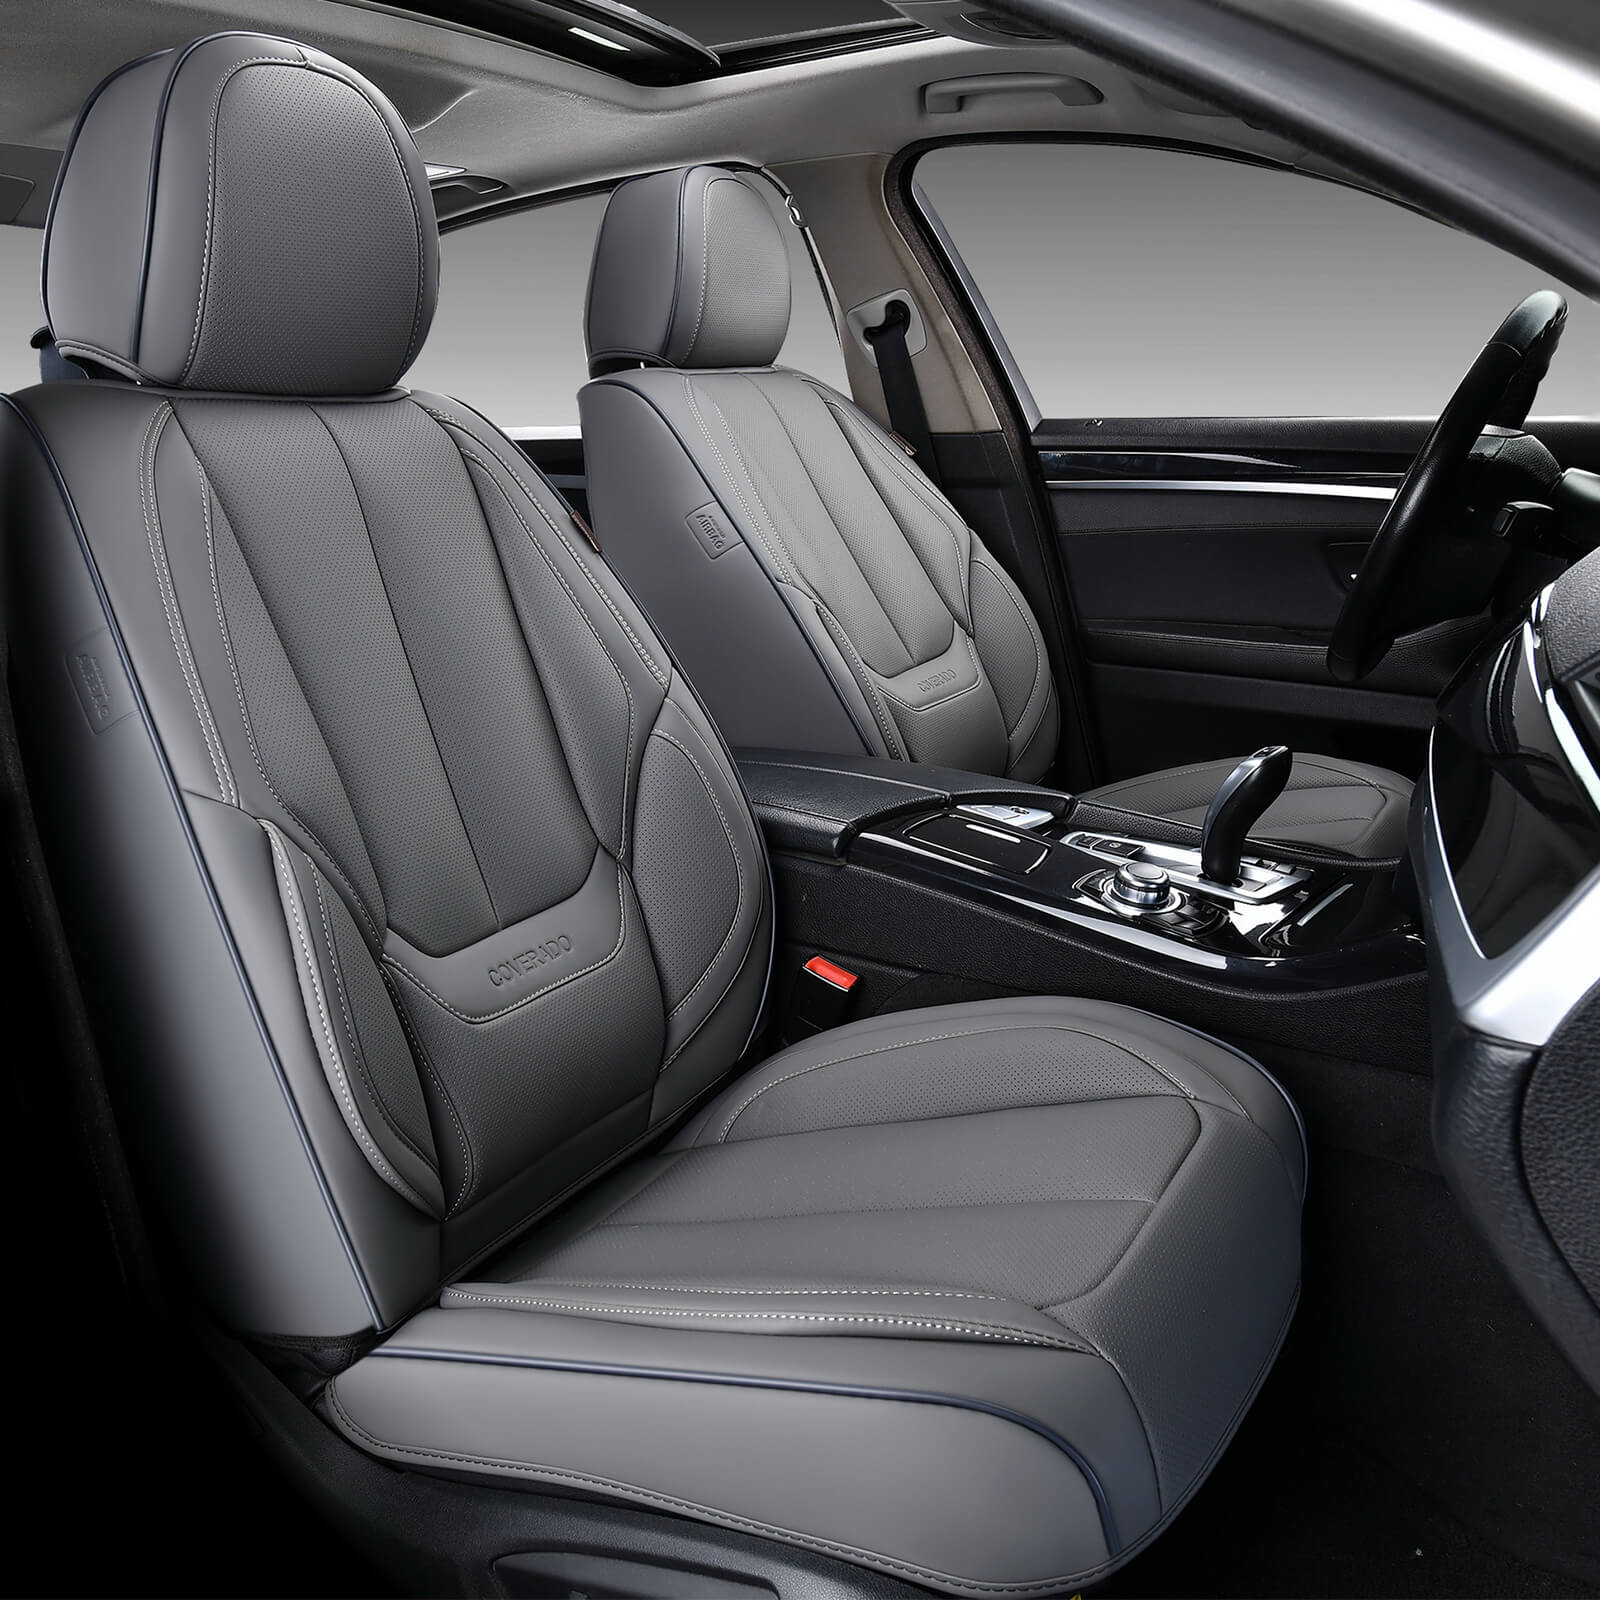 Coverado 2 Seats Blue Front Car Seat Covers, Premium Leatherette